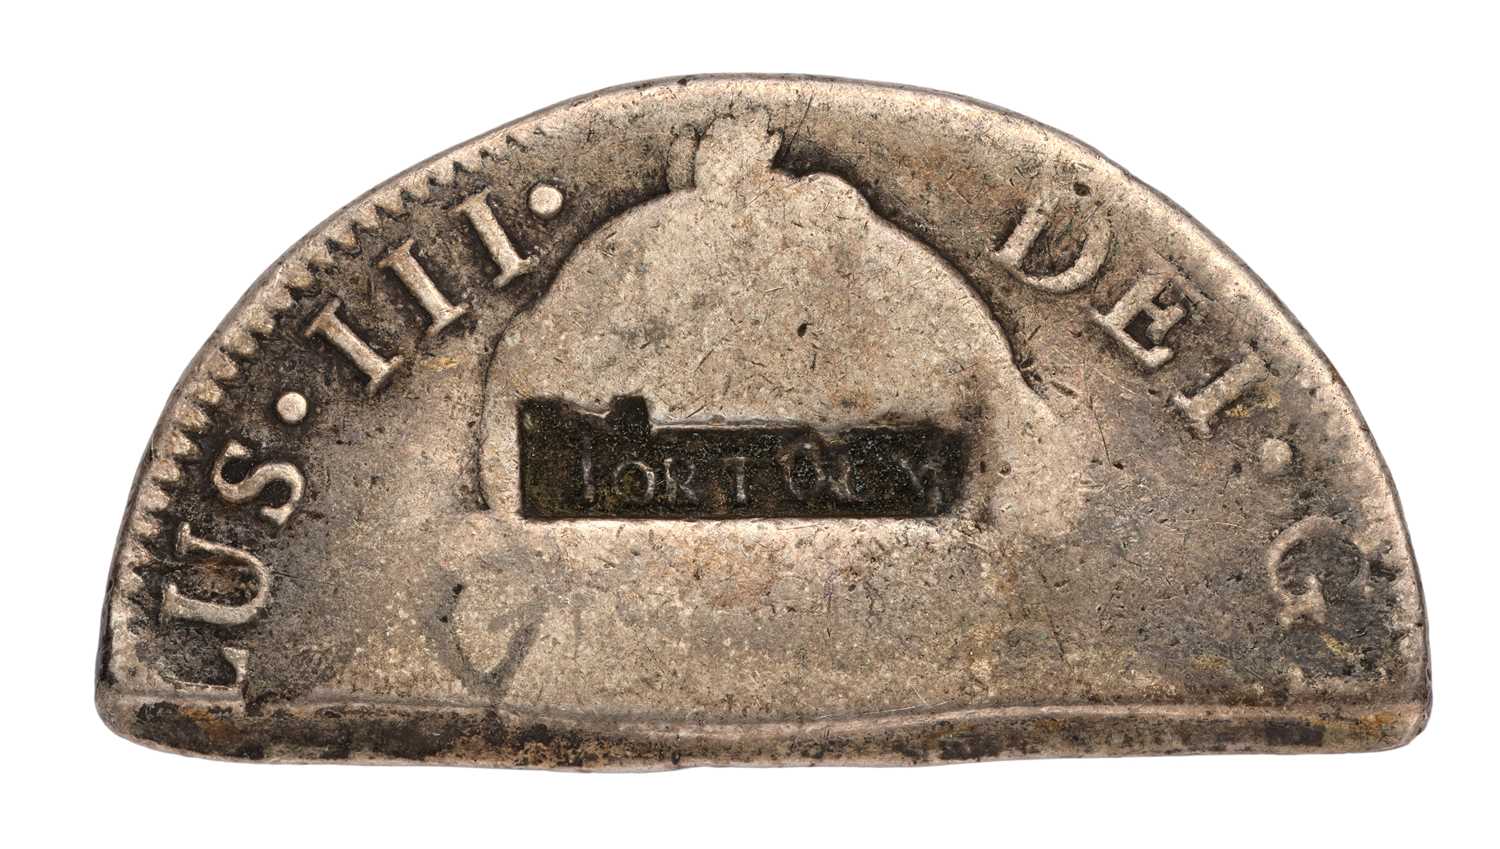 Virgin Islands, Tortola, Half Dollar 1801, 13.45g, type 1, half cut section of Spanish Empire,